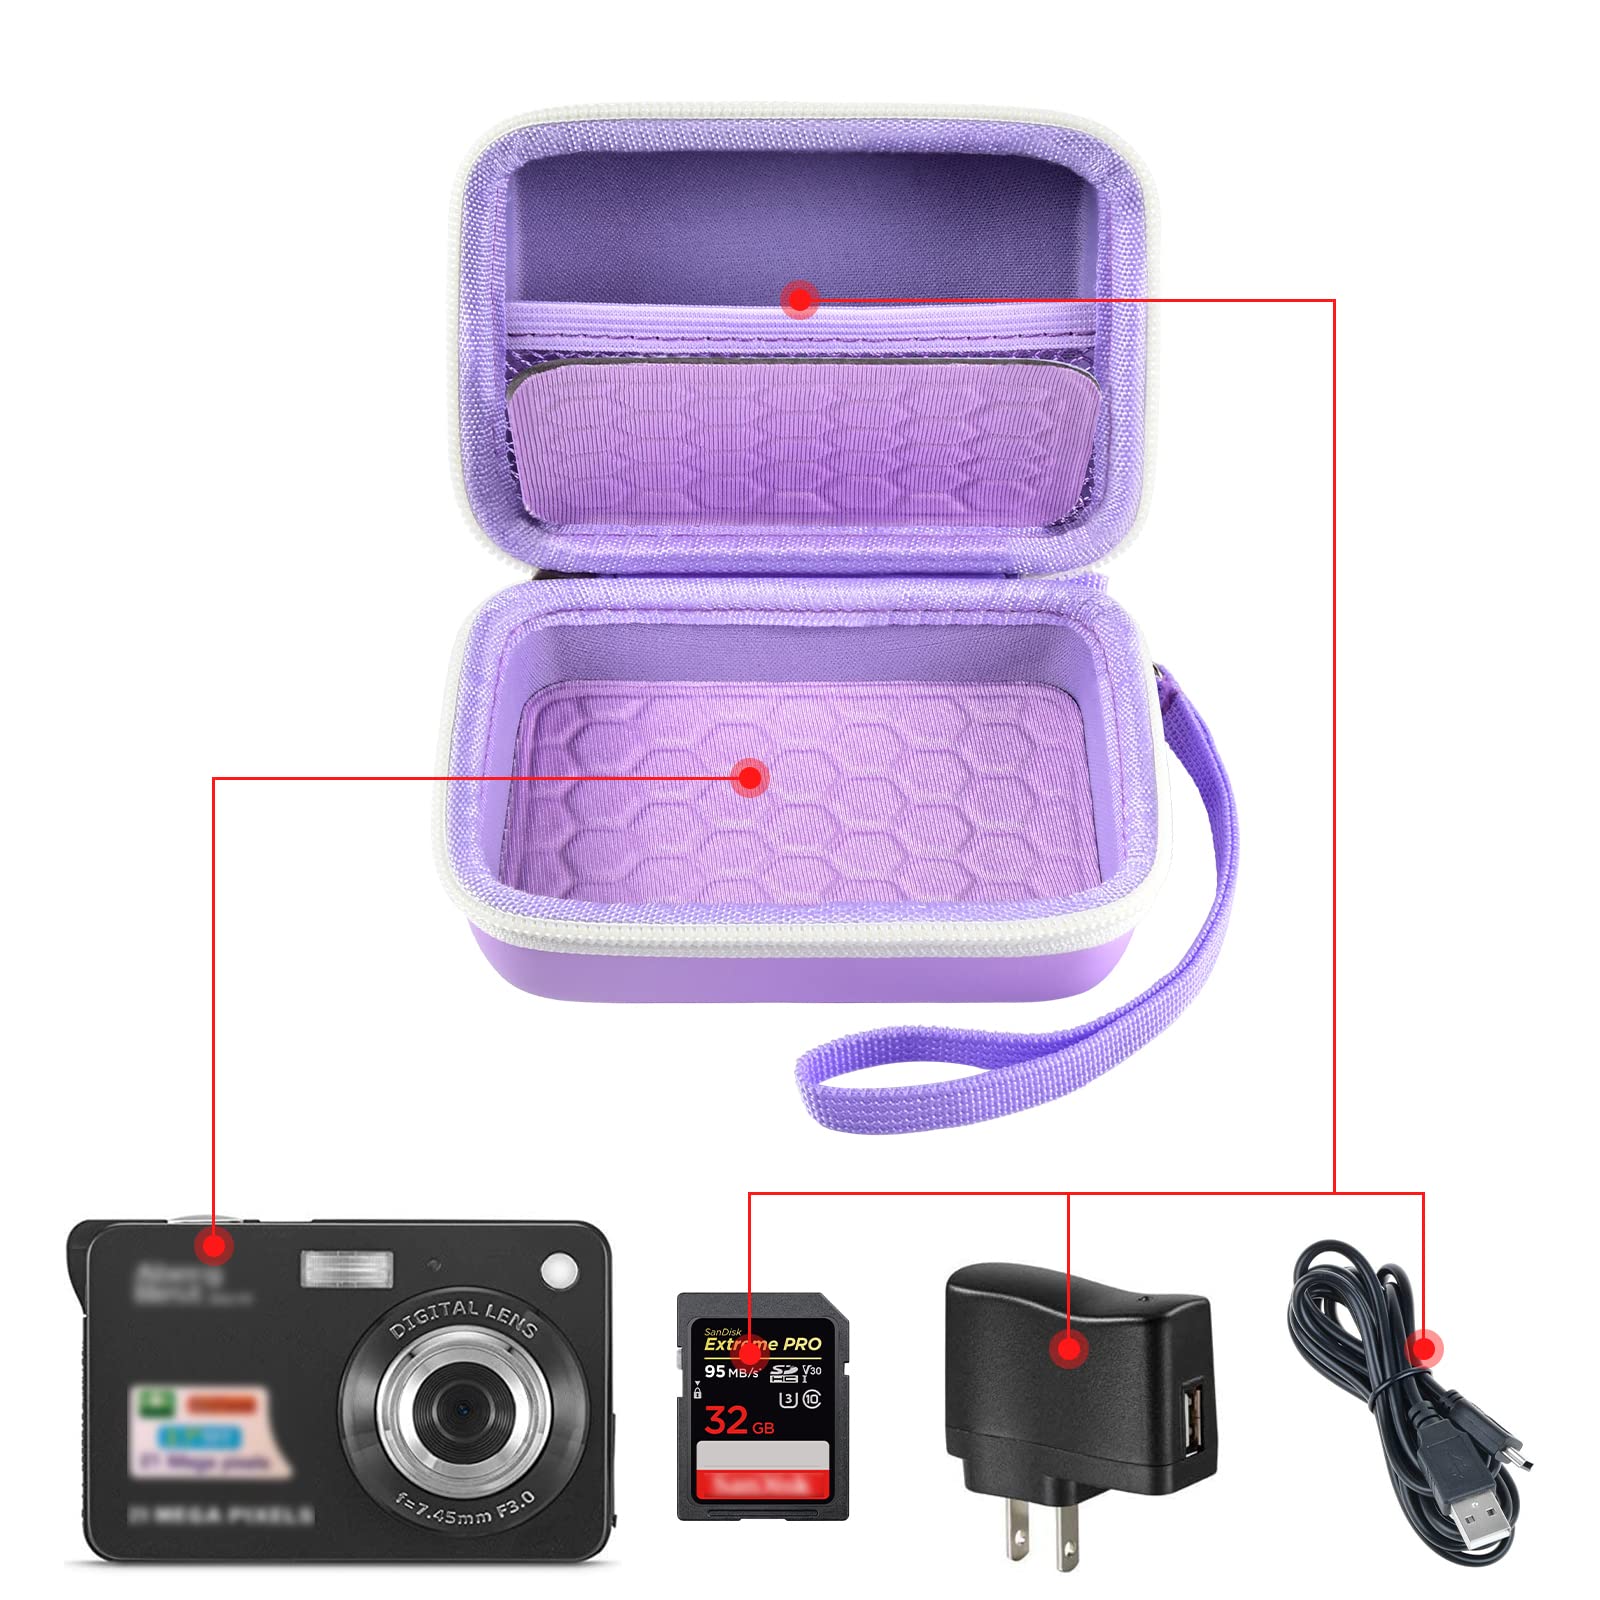 Carrying & Protective Case for Digital Camera, AbergBest 21 Mega Pixels 2.7" LCD Rechargeable HD/Kodak Pixpro/Canon PowerShot ELPH 180/190 / Sony DSCW800 / DSCW830 Cameras for Travel - Purple